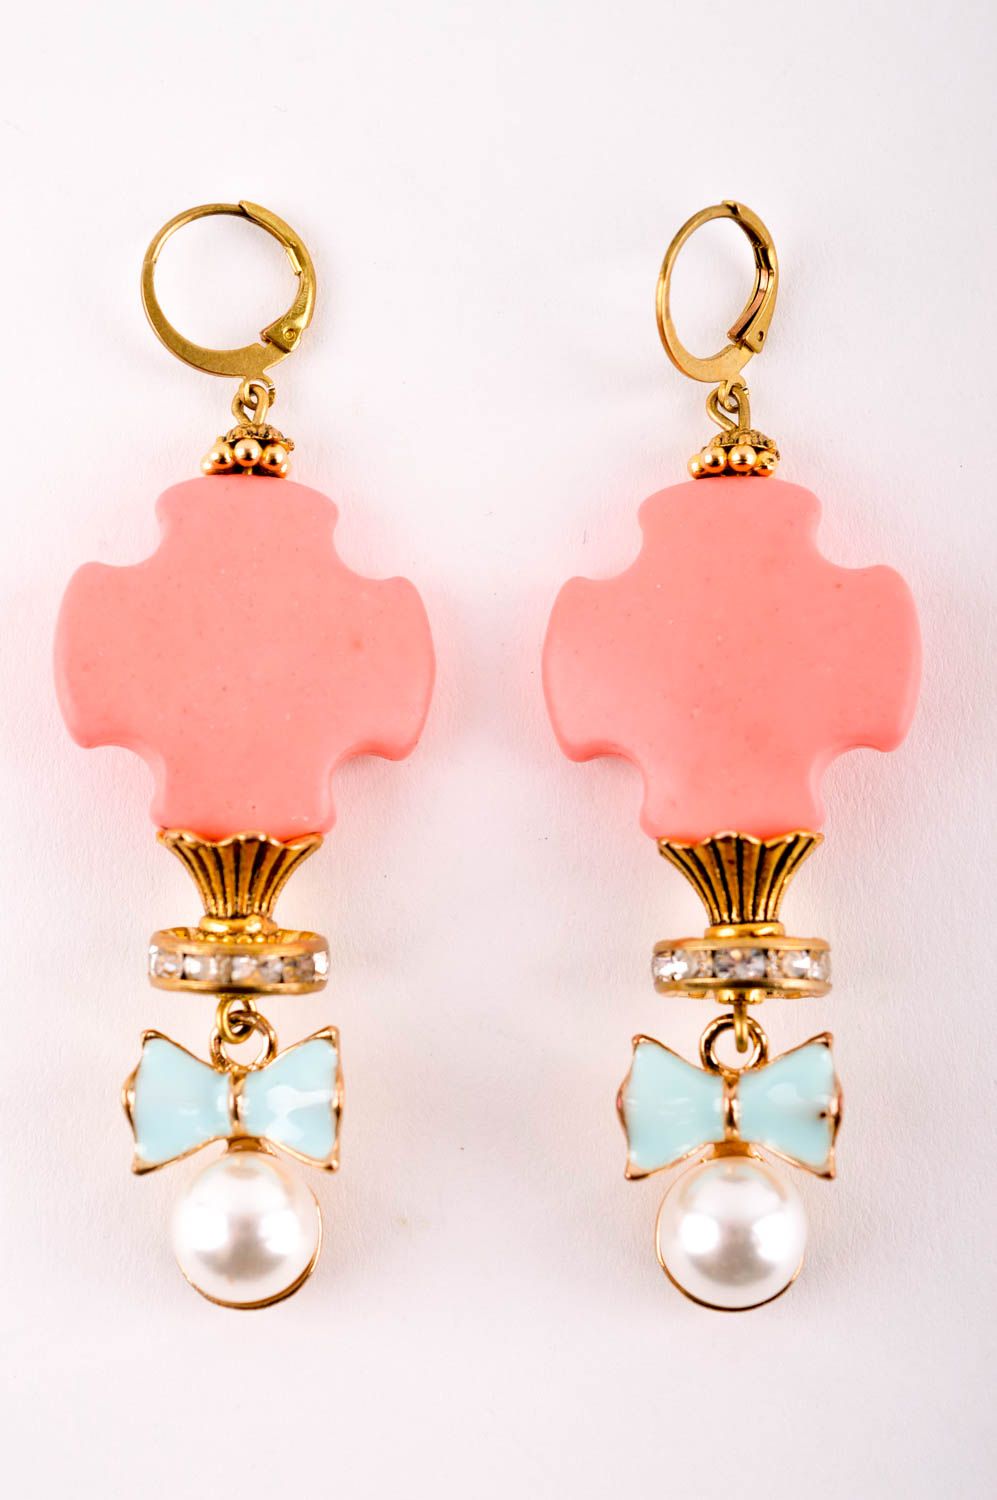 Handmade earrings designer earrings with charms pearl earrings for women photo 3